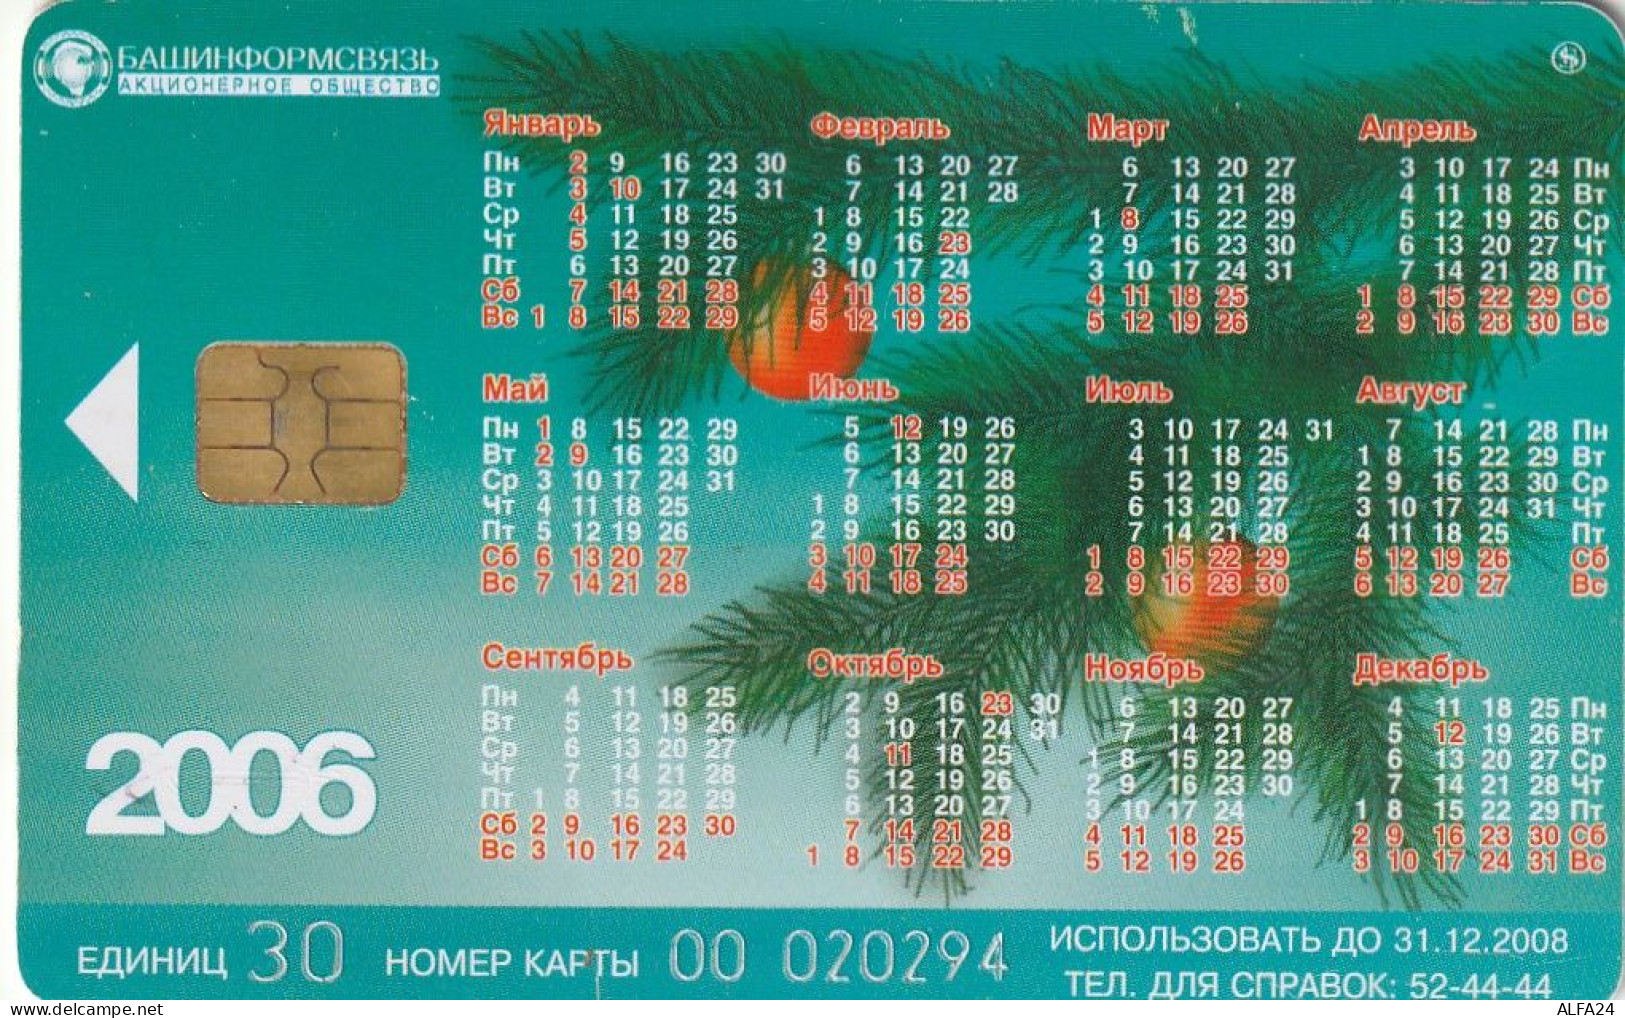 PHONE CARD RUSSIA Bashinformsvyaz - Ufa (E10.2.4 - Russia